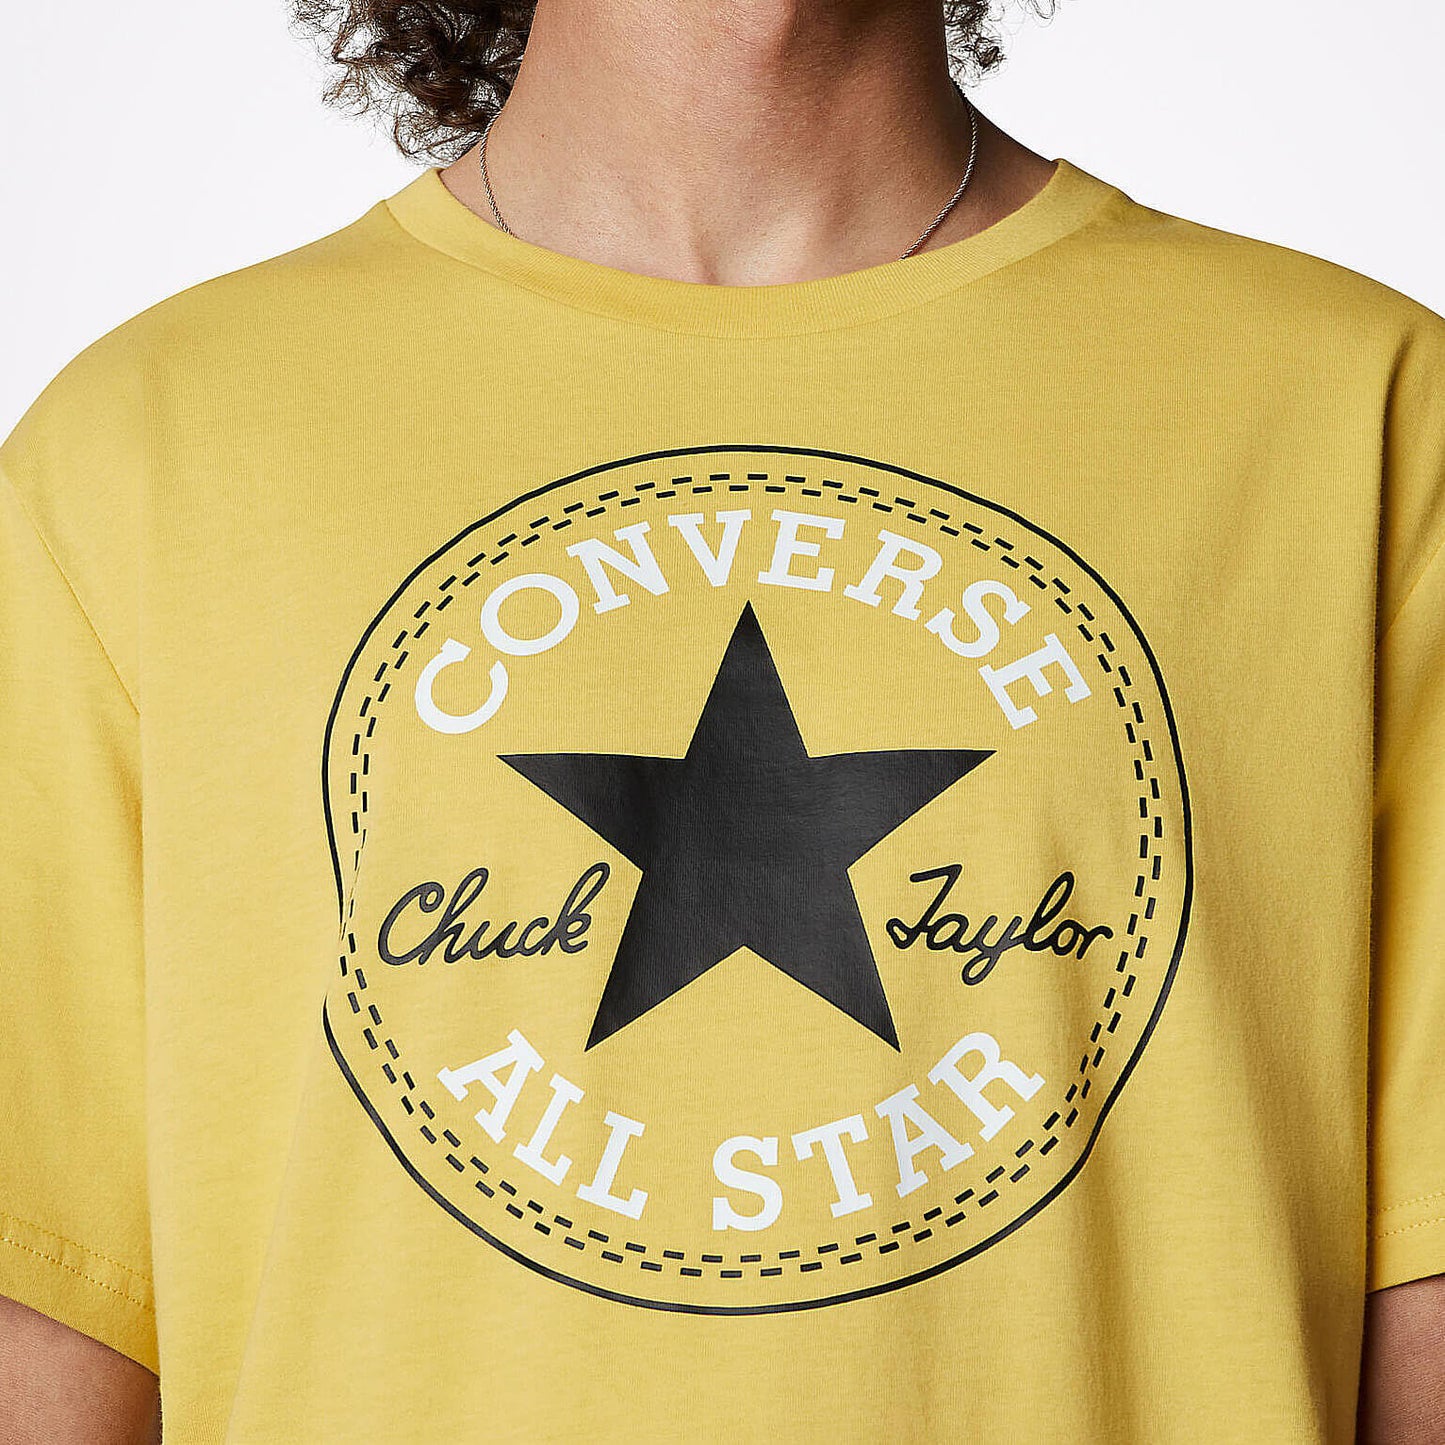 Converse Nova Chuck Patch Tee Yellow